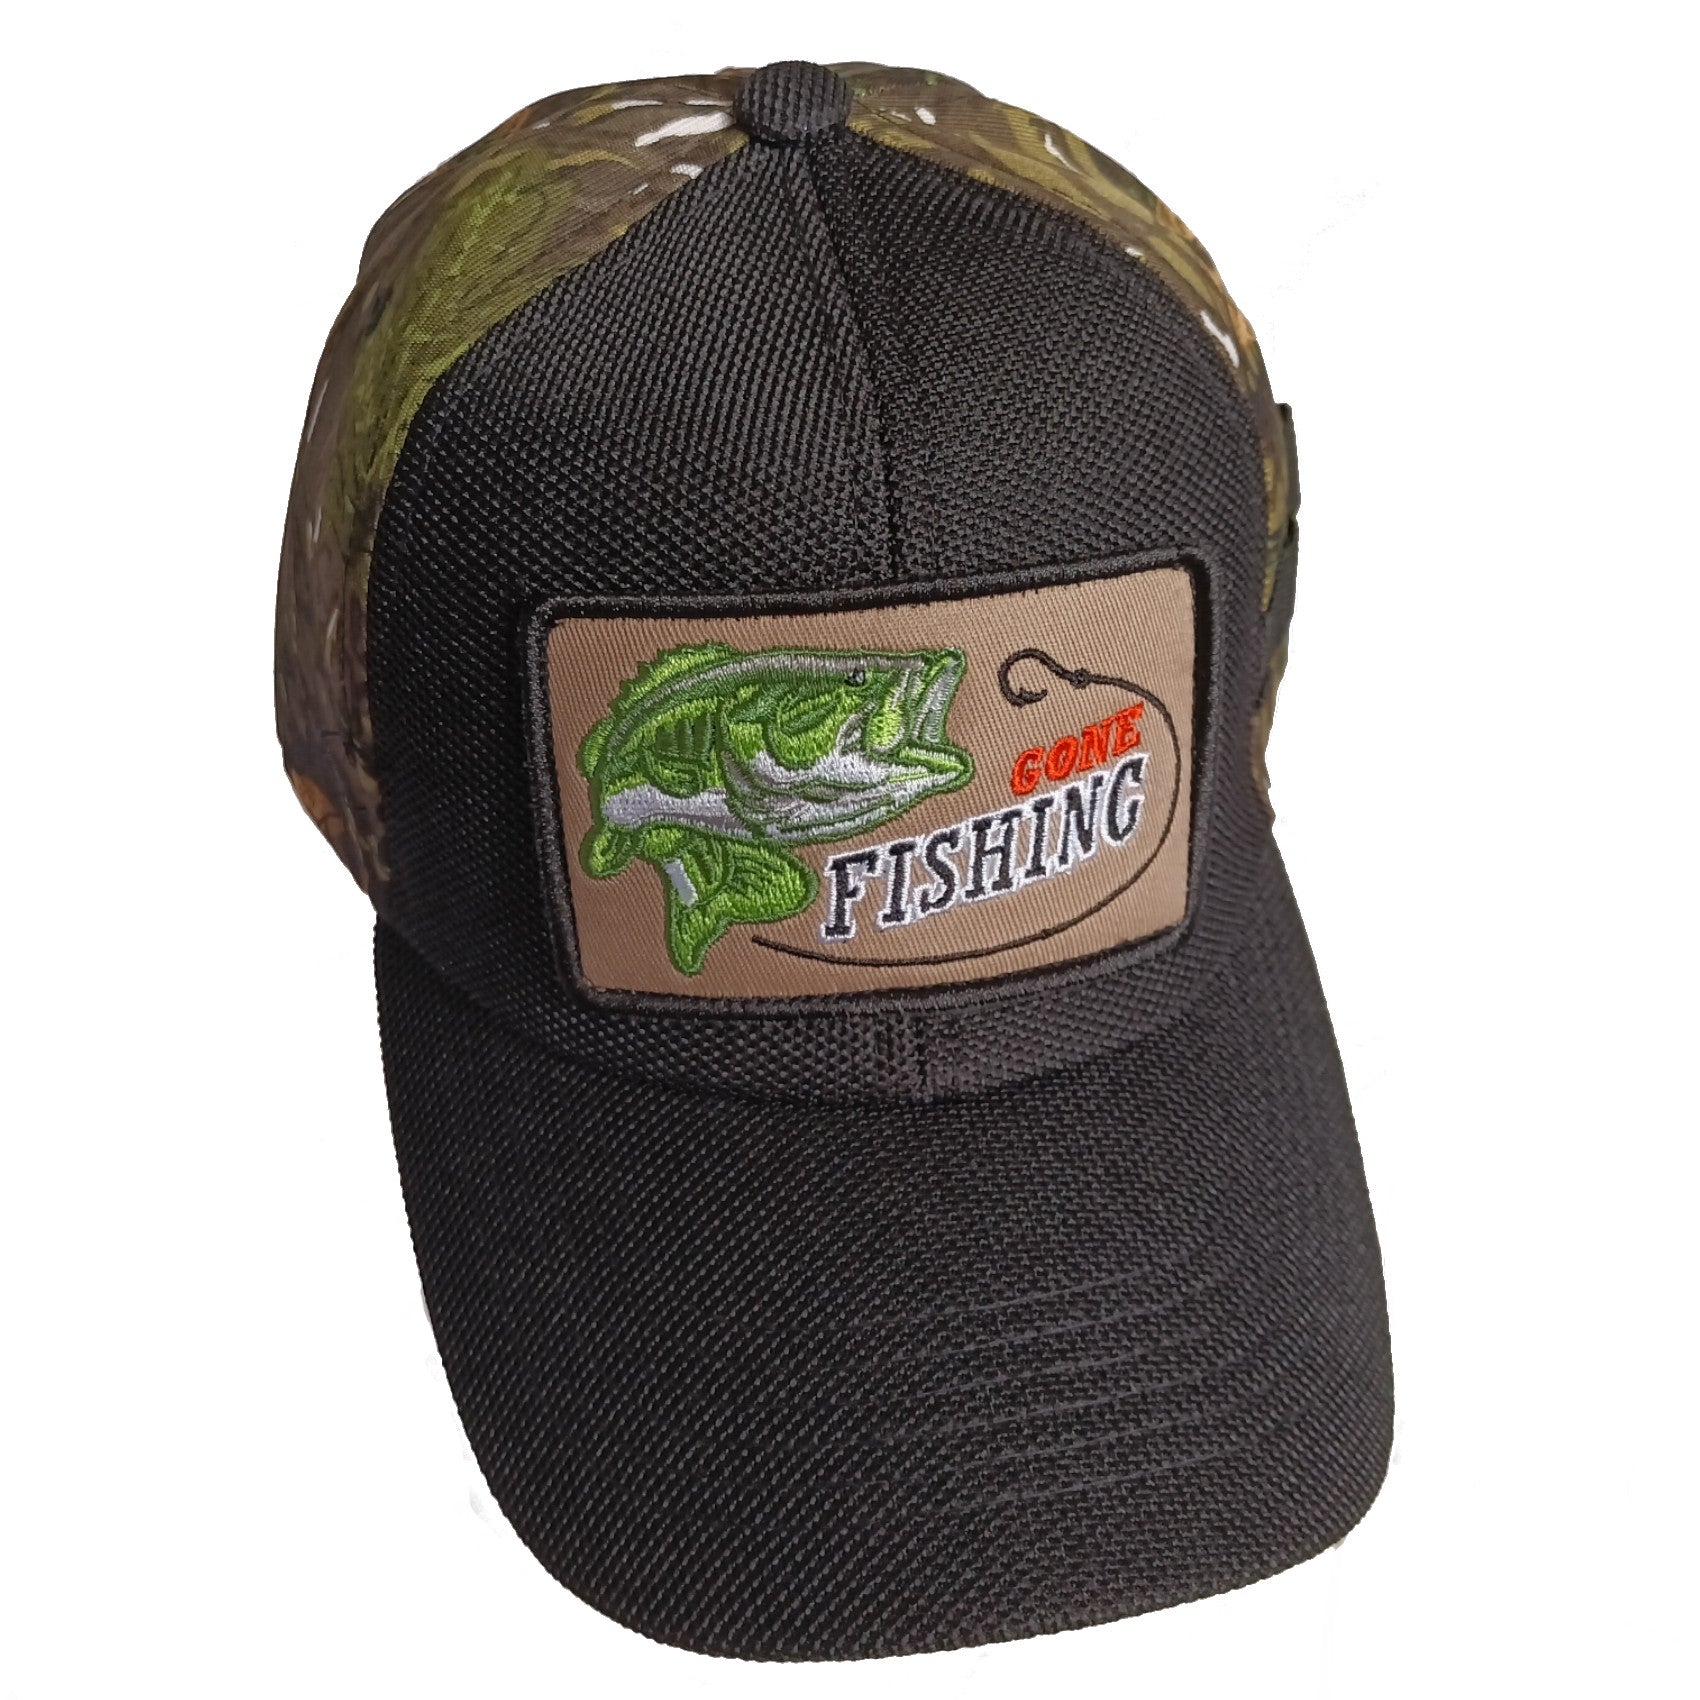 Gone Bass Fishing Patch Trucker Hat Cap (Black/Camouflage) – Hat Crew